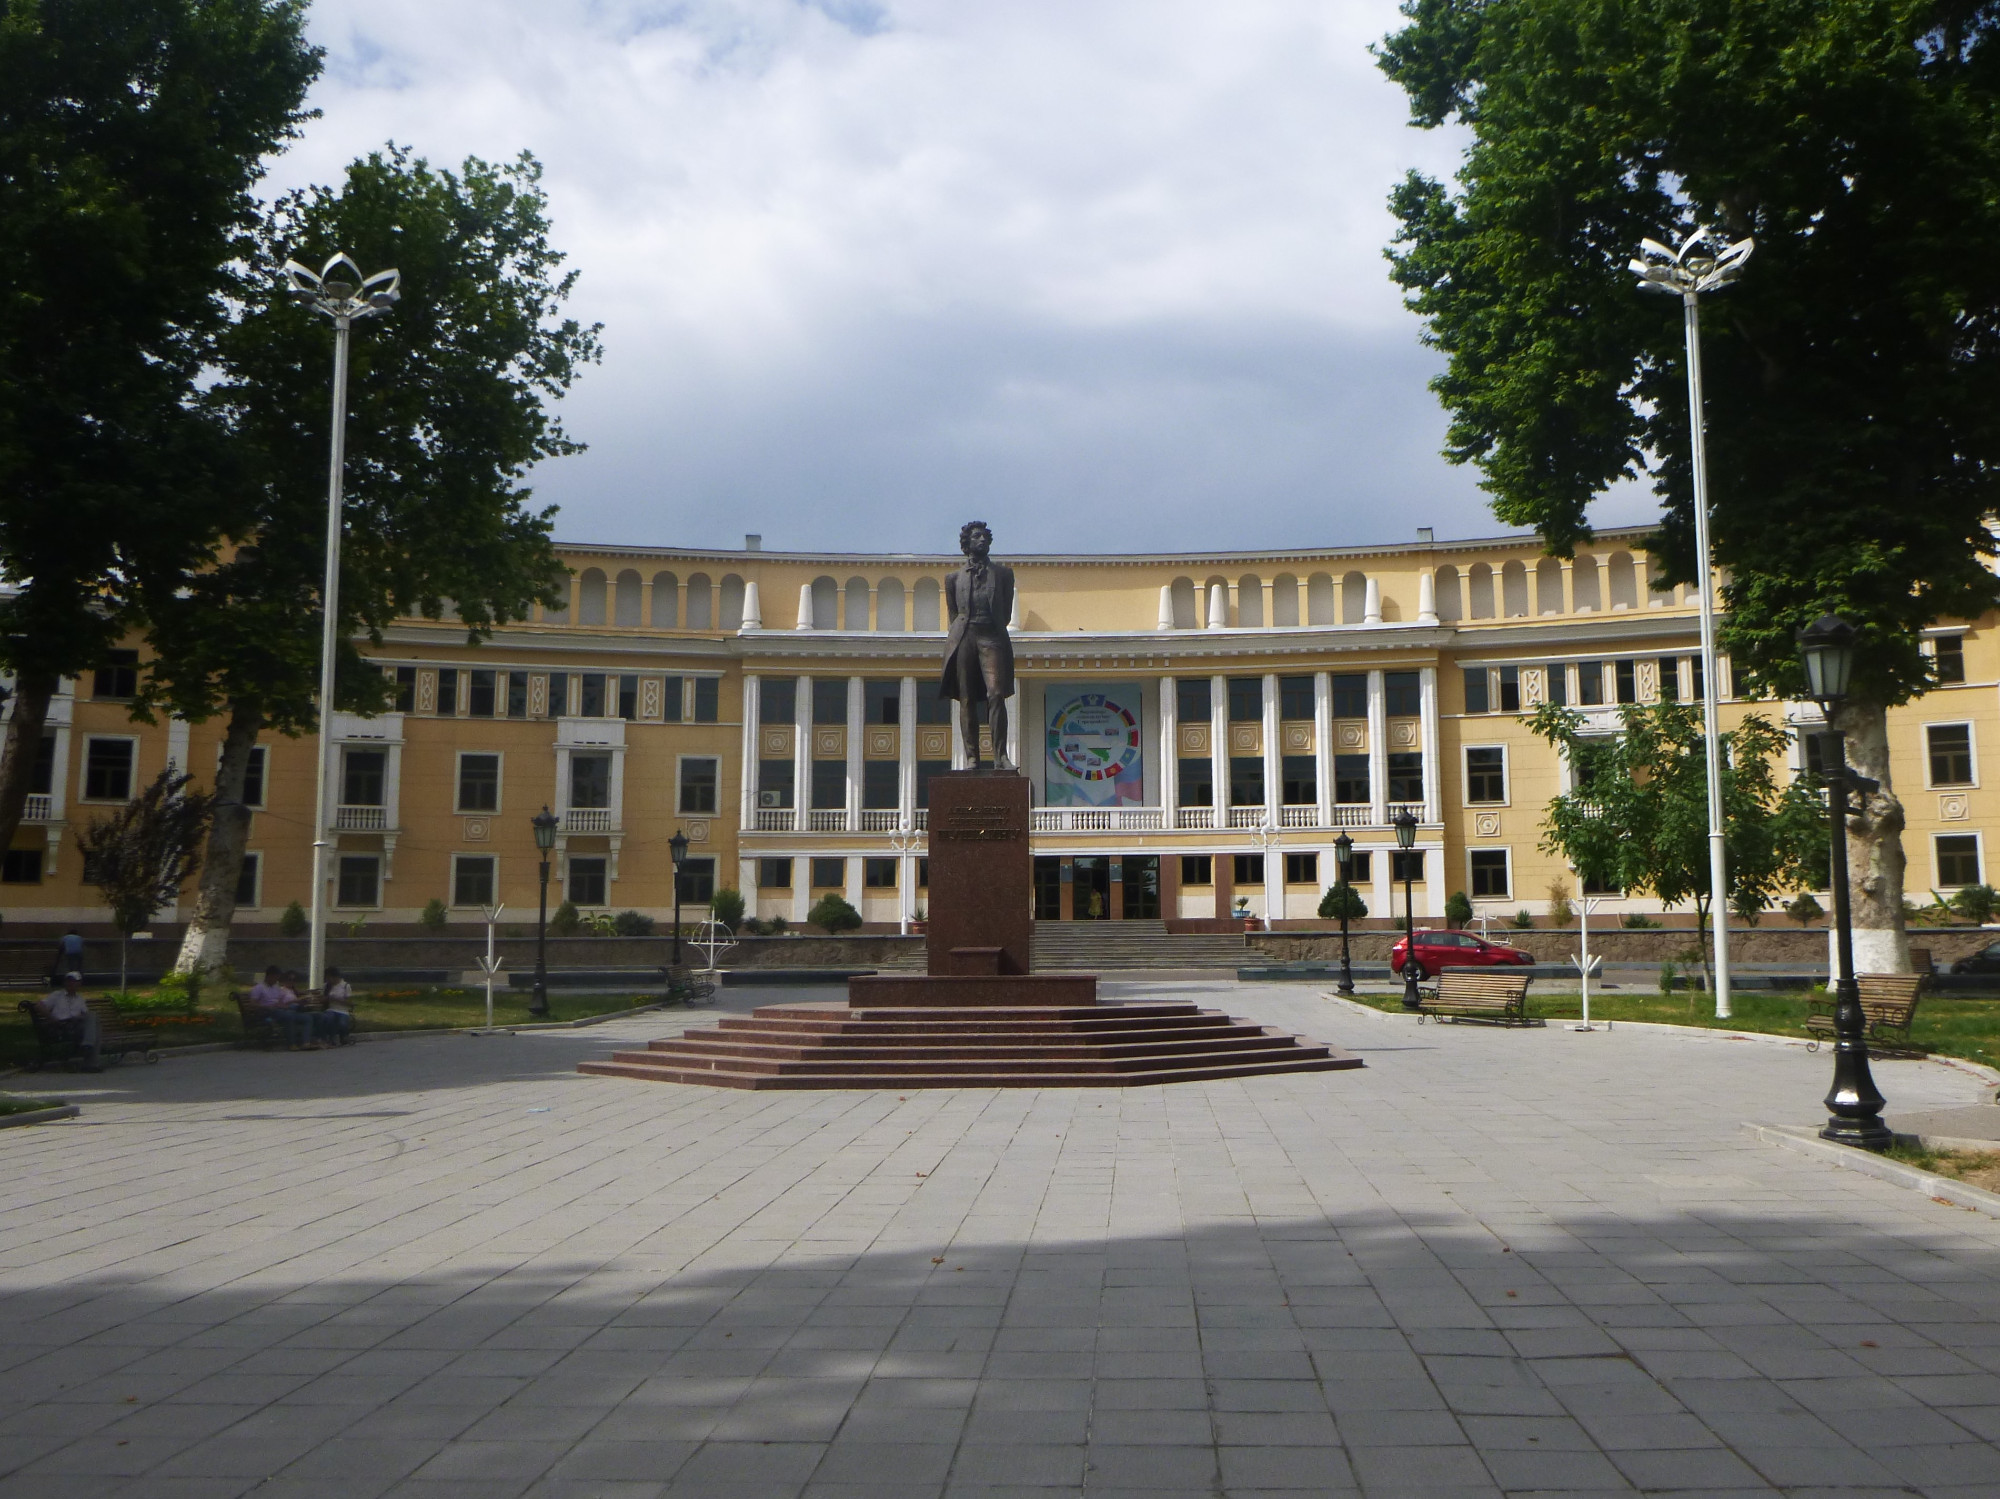 Pamyatnik A.S. Pushkinu Statue